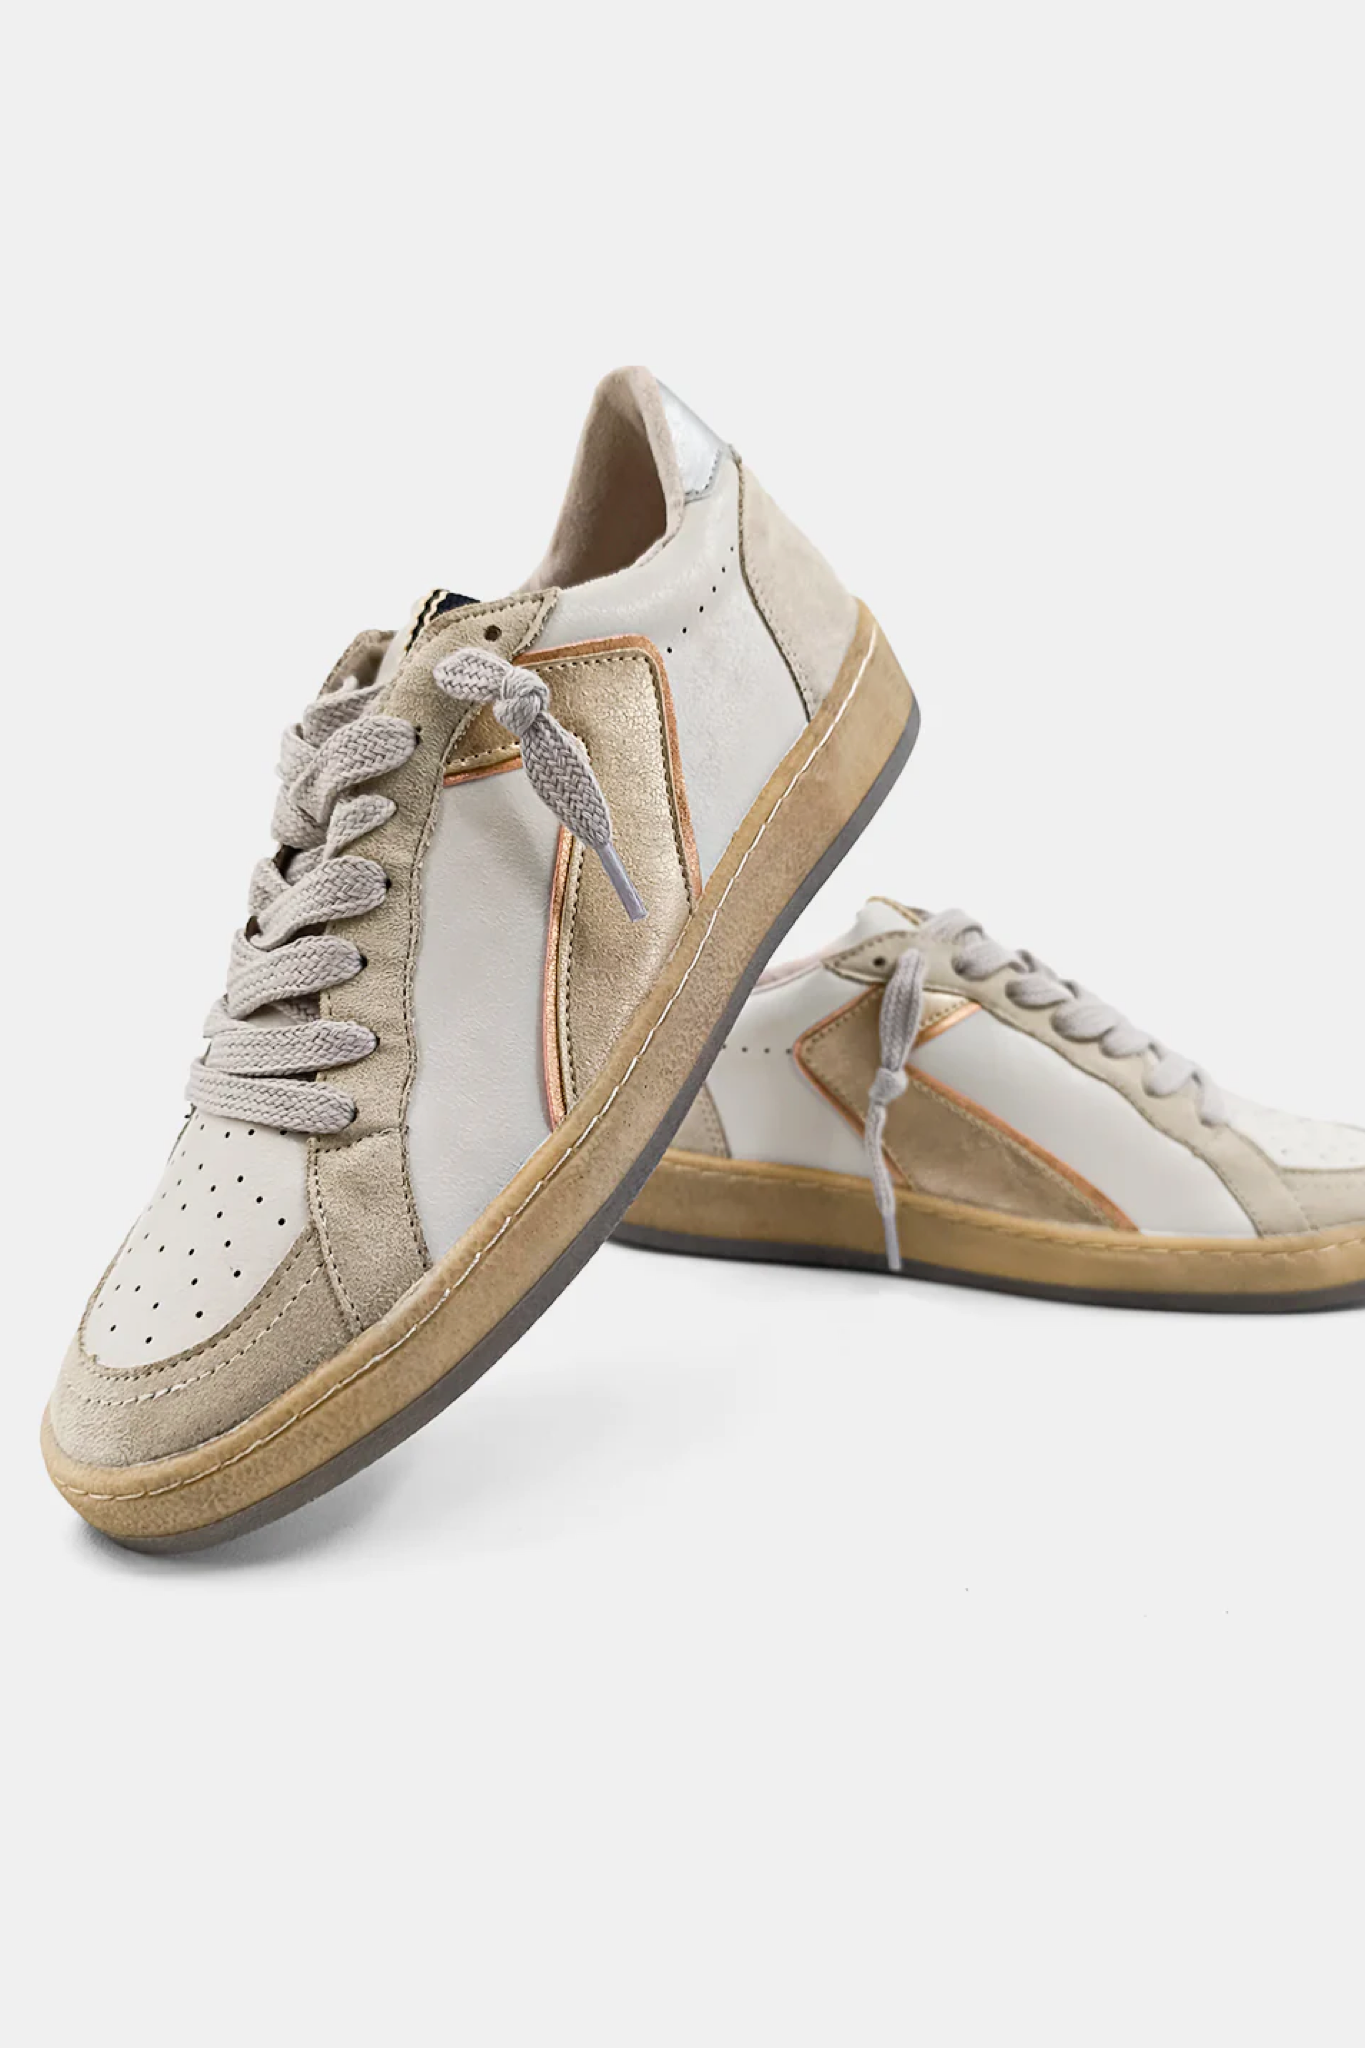 The Salma Metallic Gold Stripe ShuShop Sneakers